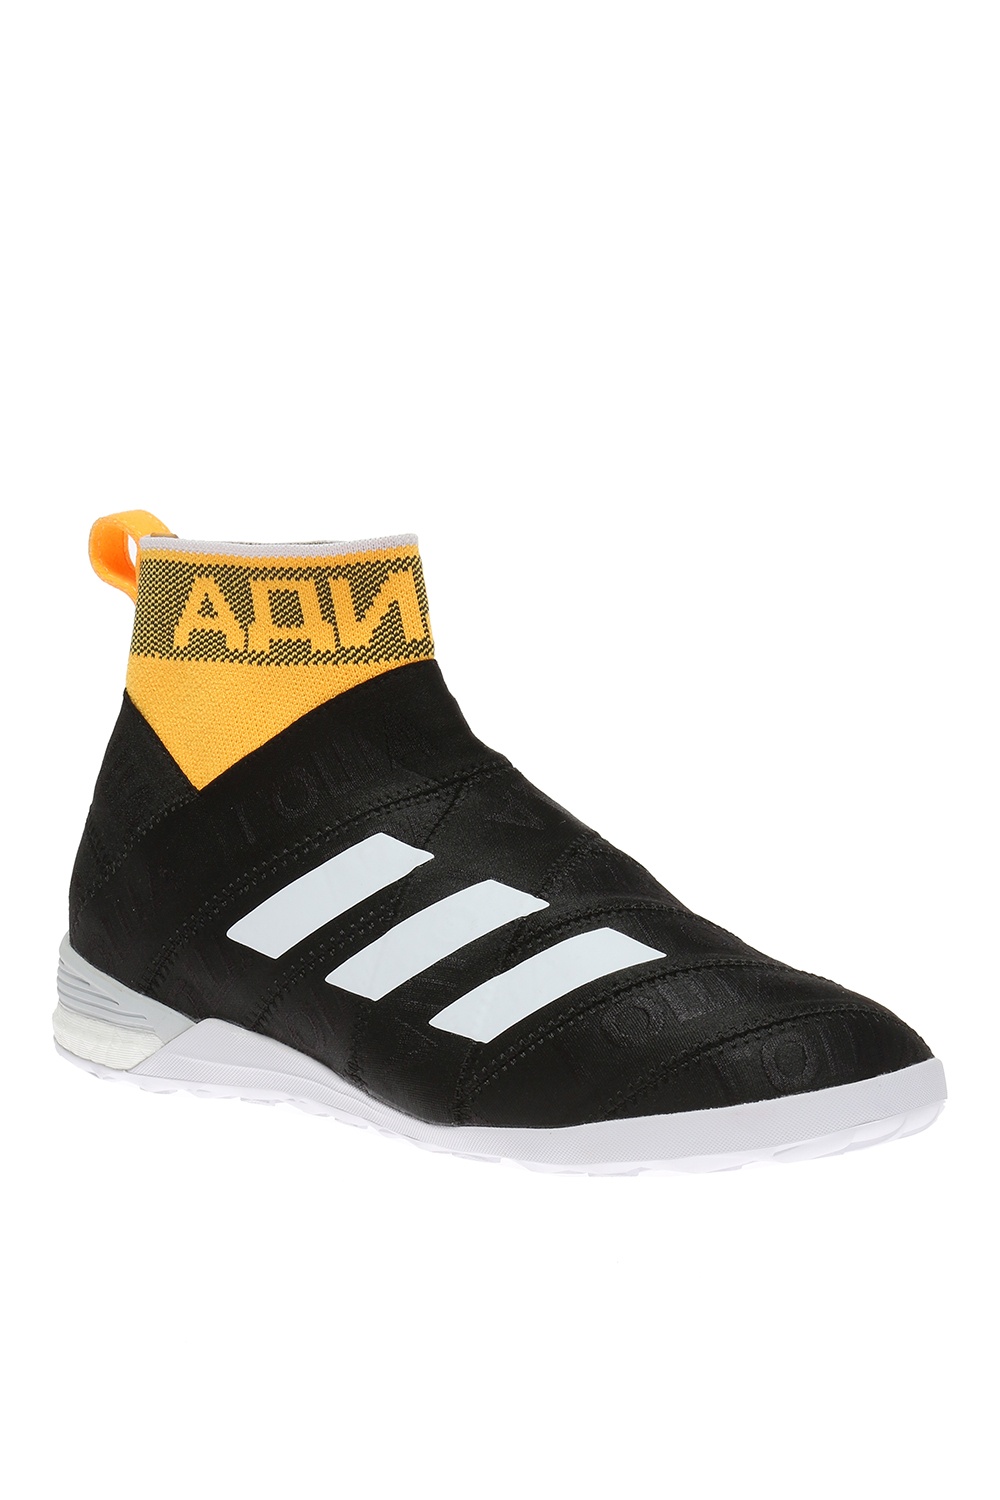 gosha rubchinskiy x adidas sneakers